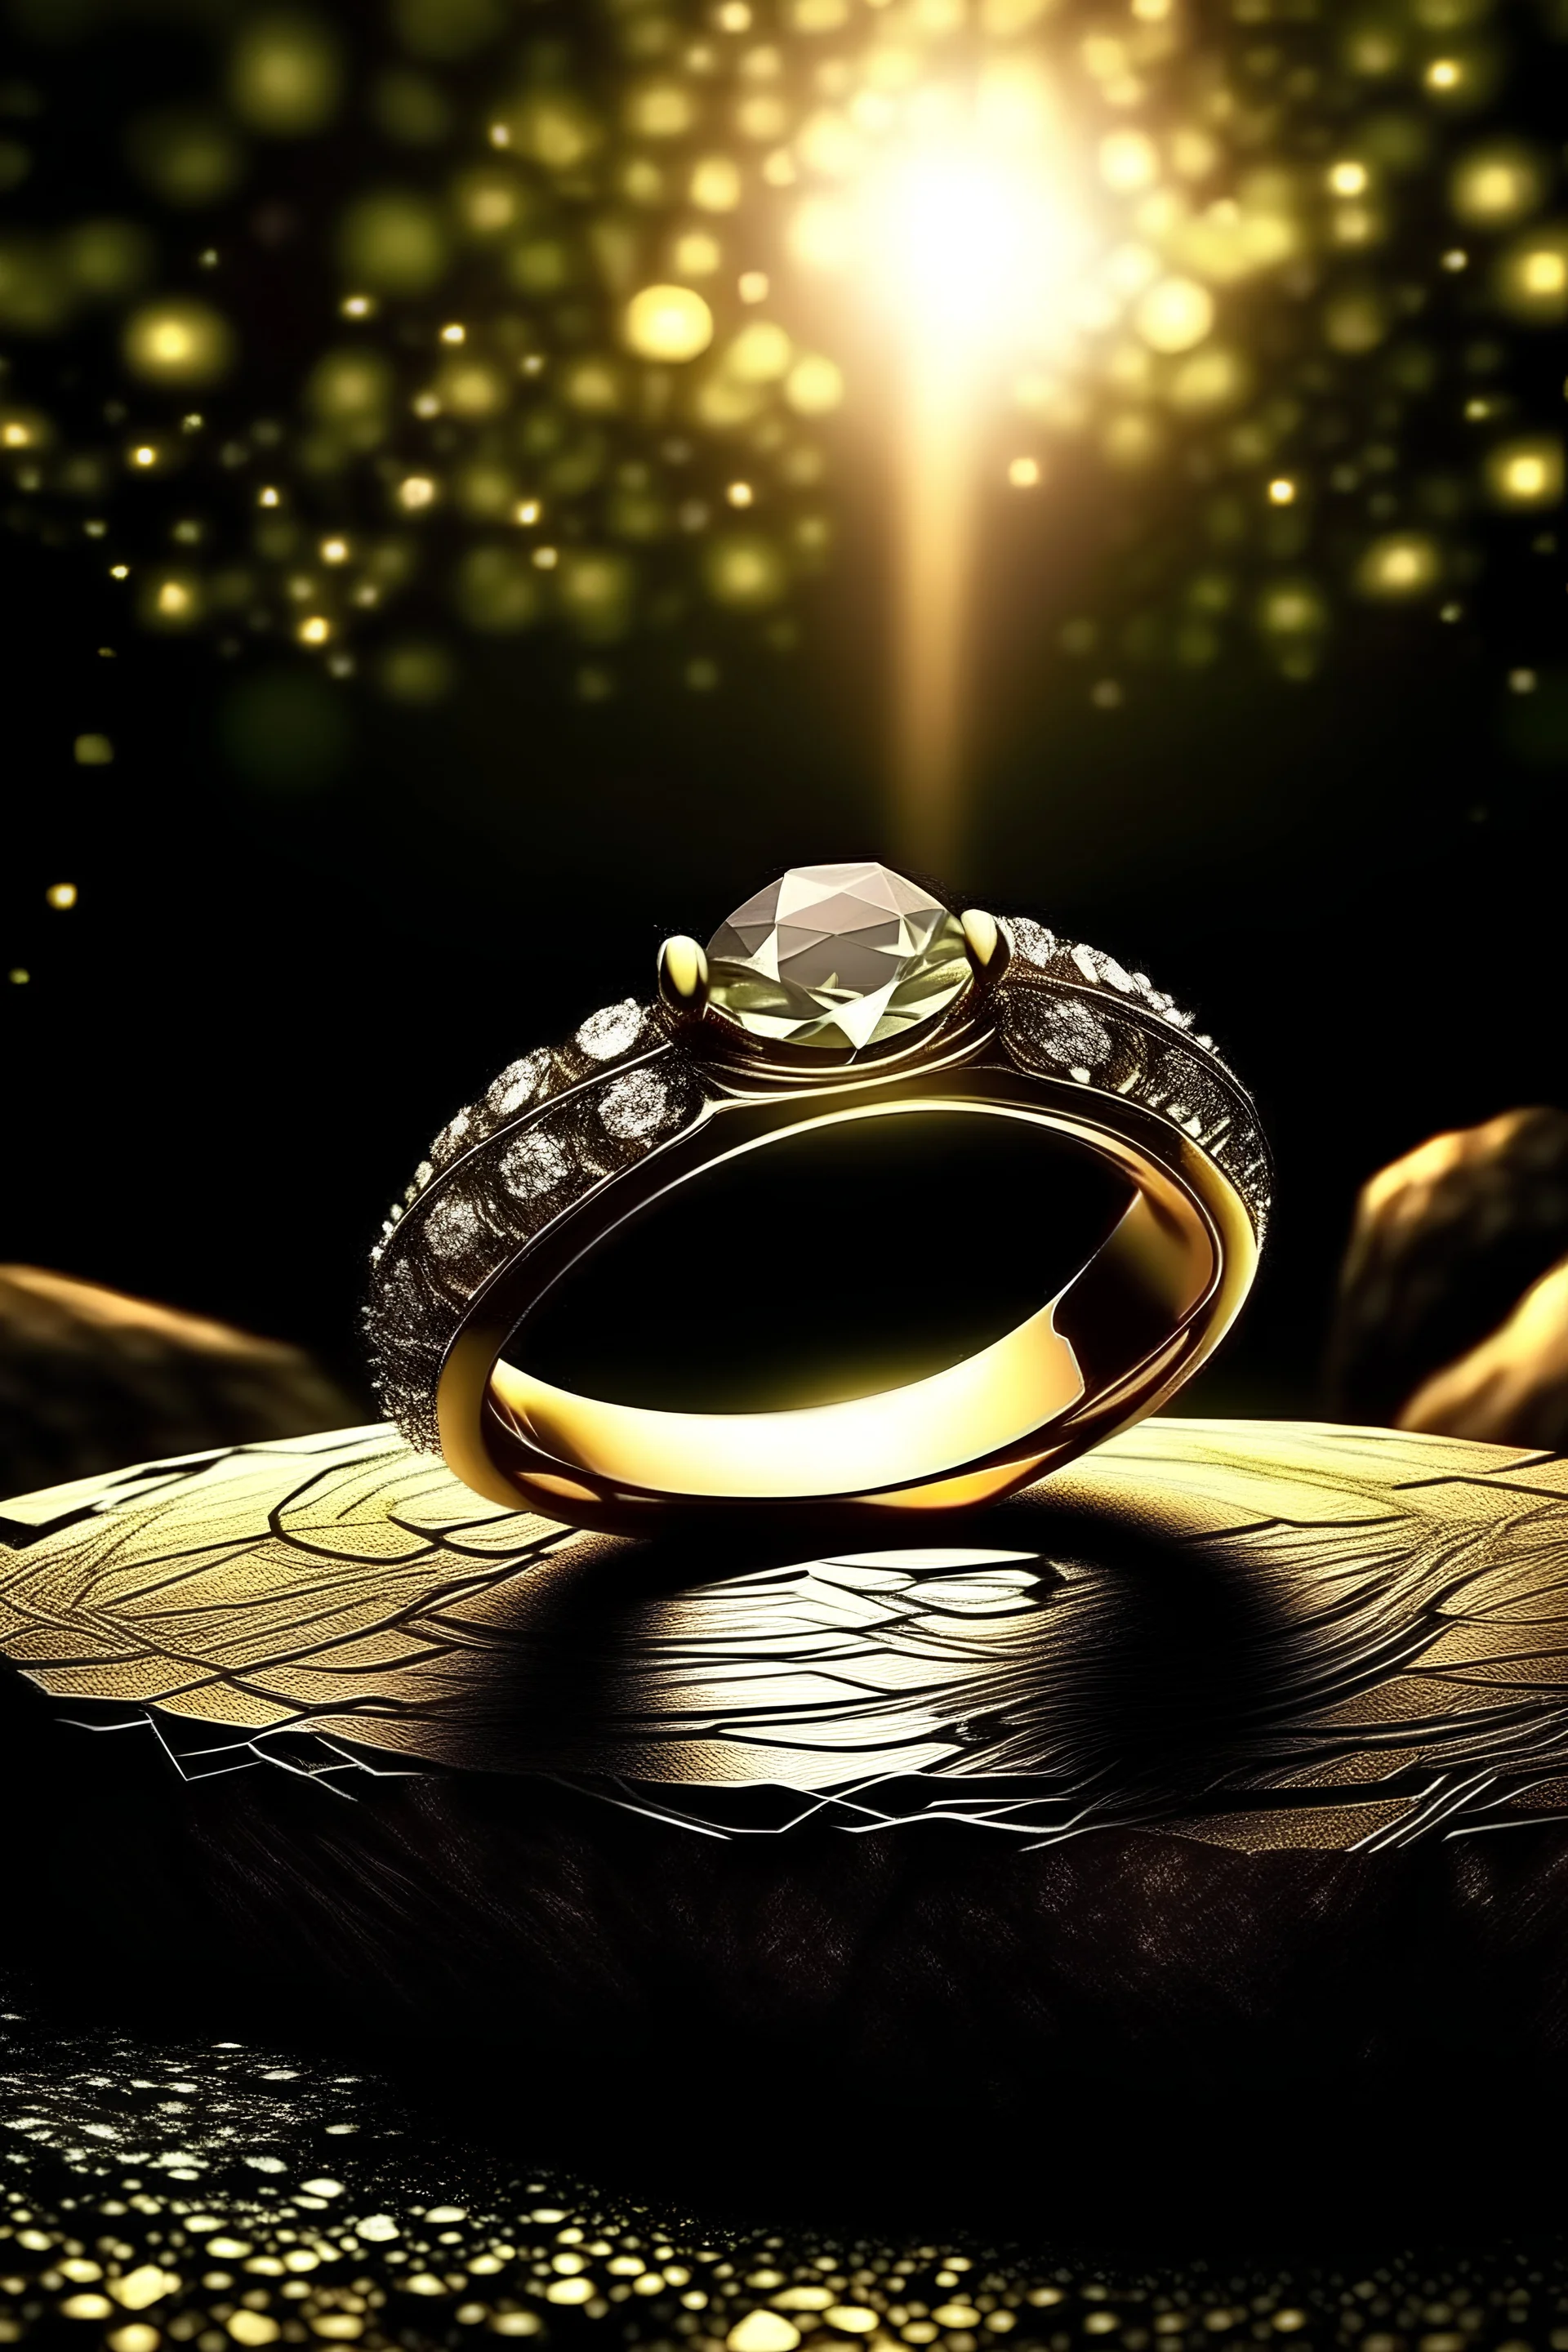 Gold Wedding Rings or Engagement Ring on Invitation Card Background. Couple  Ring Beautiful and Elegant Stock Image - Image of jewel, elegant: 180059525